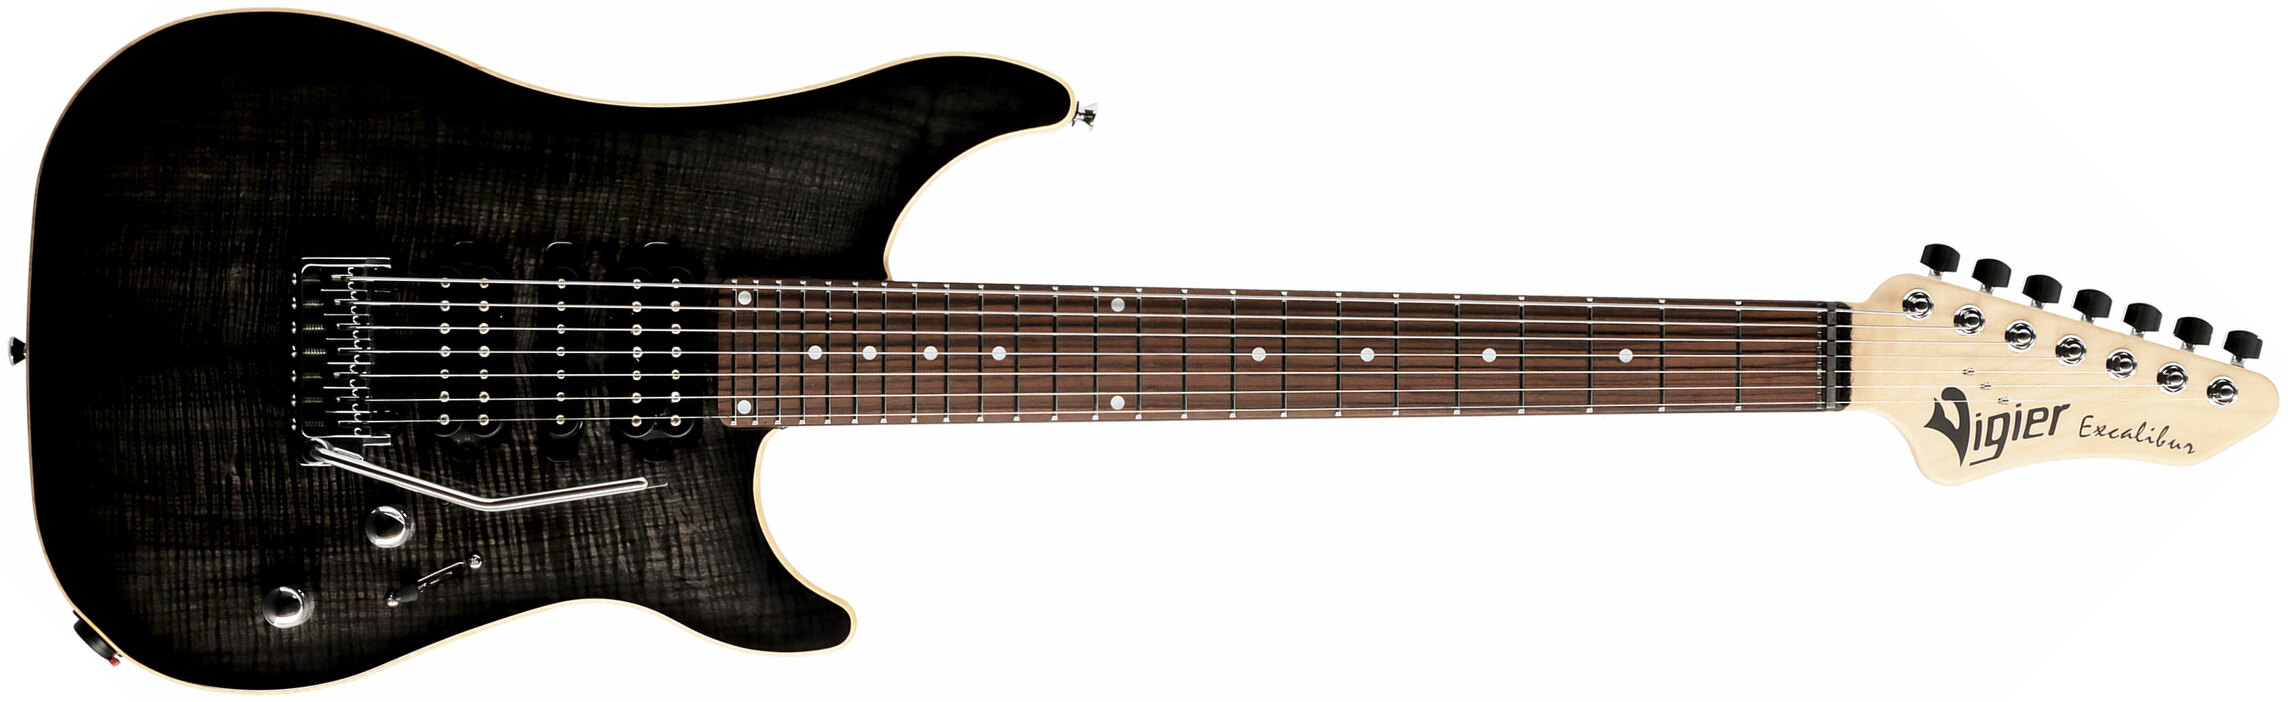 Vigier Excalibur Special 7 Hsh Trem Rw - Mysterious Black - 7 string electric guitar - Main picture